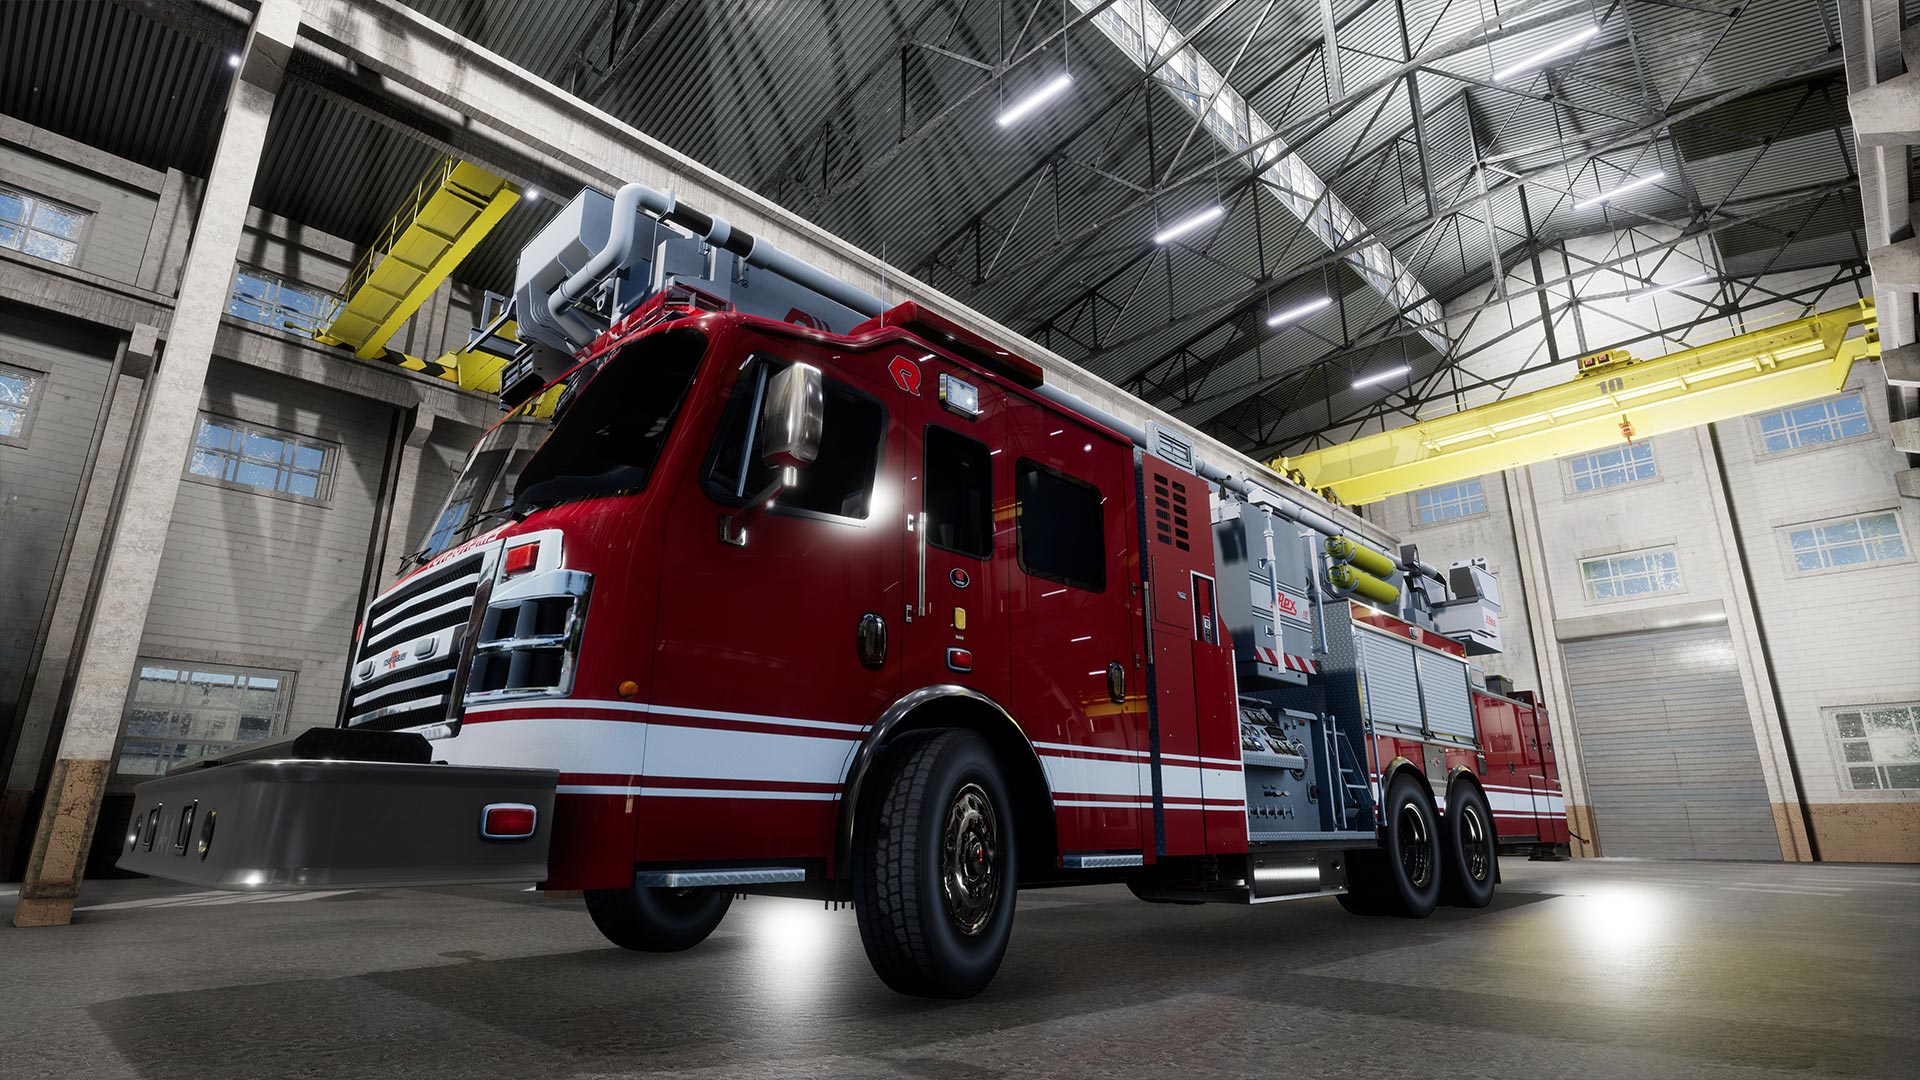 Firefighting Simulator Coming 2020 On Pc - 